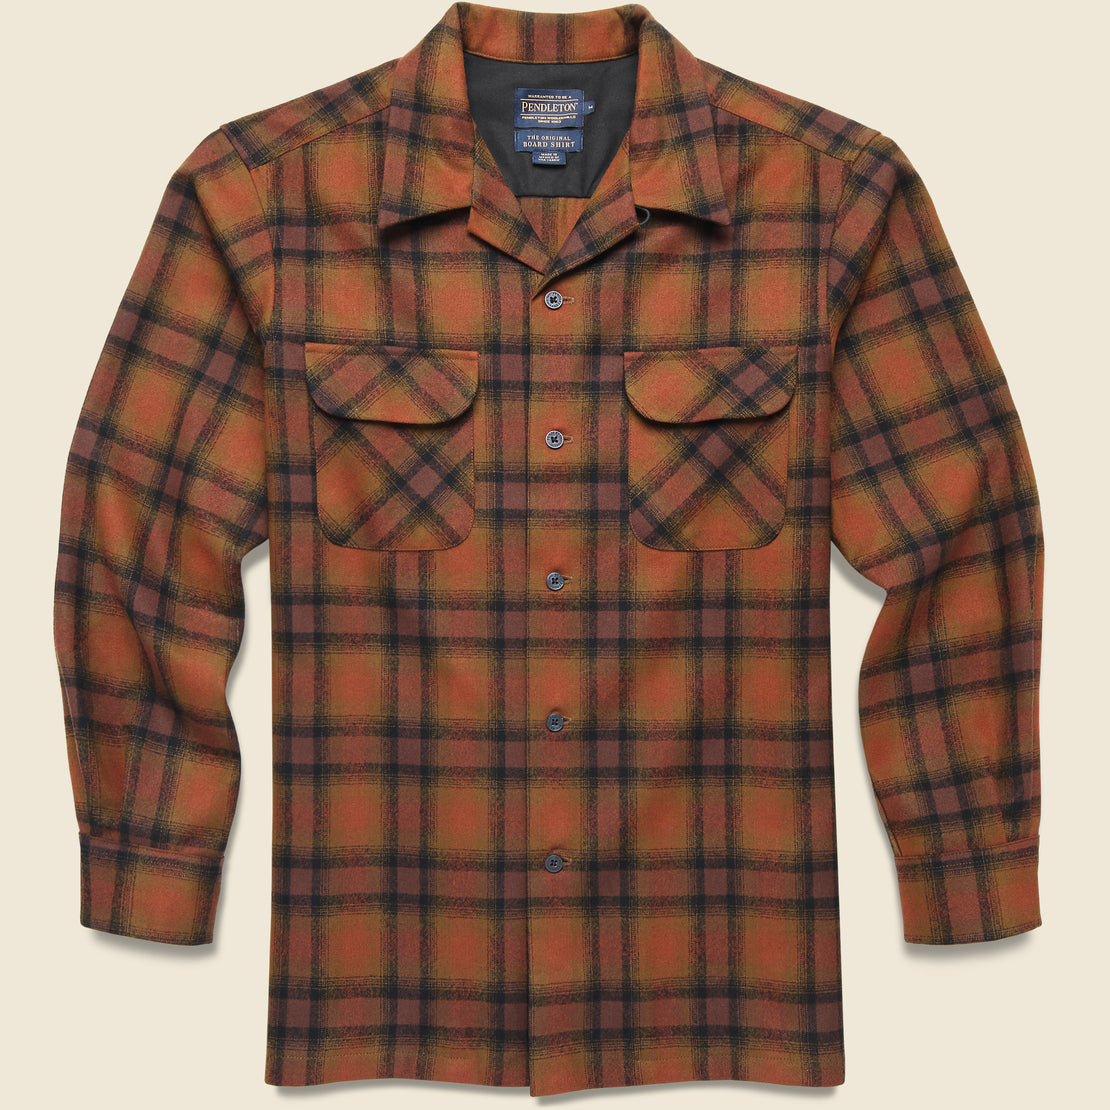 Pendleton The Original Board Shirt - Brown/Brick Ombre